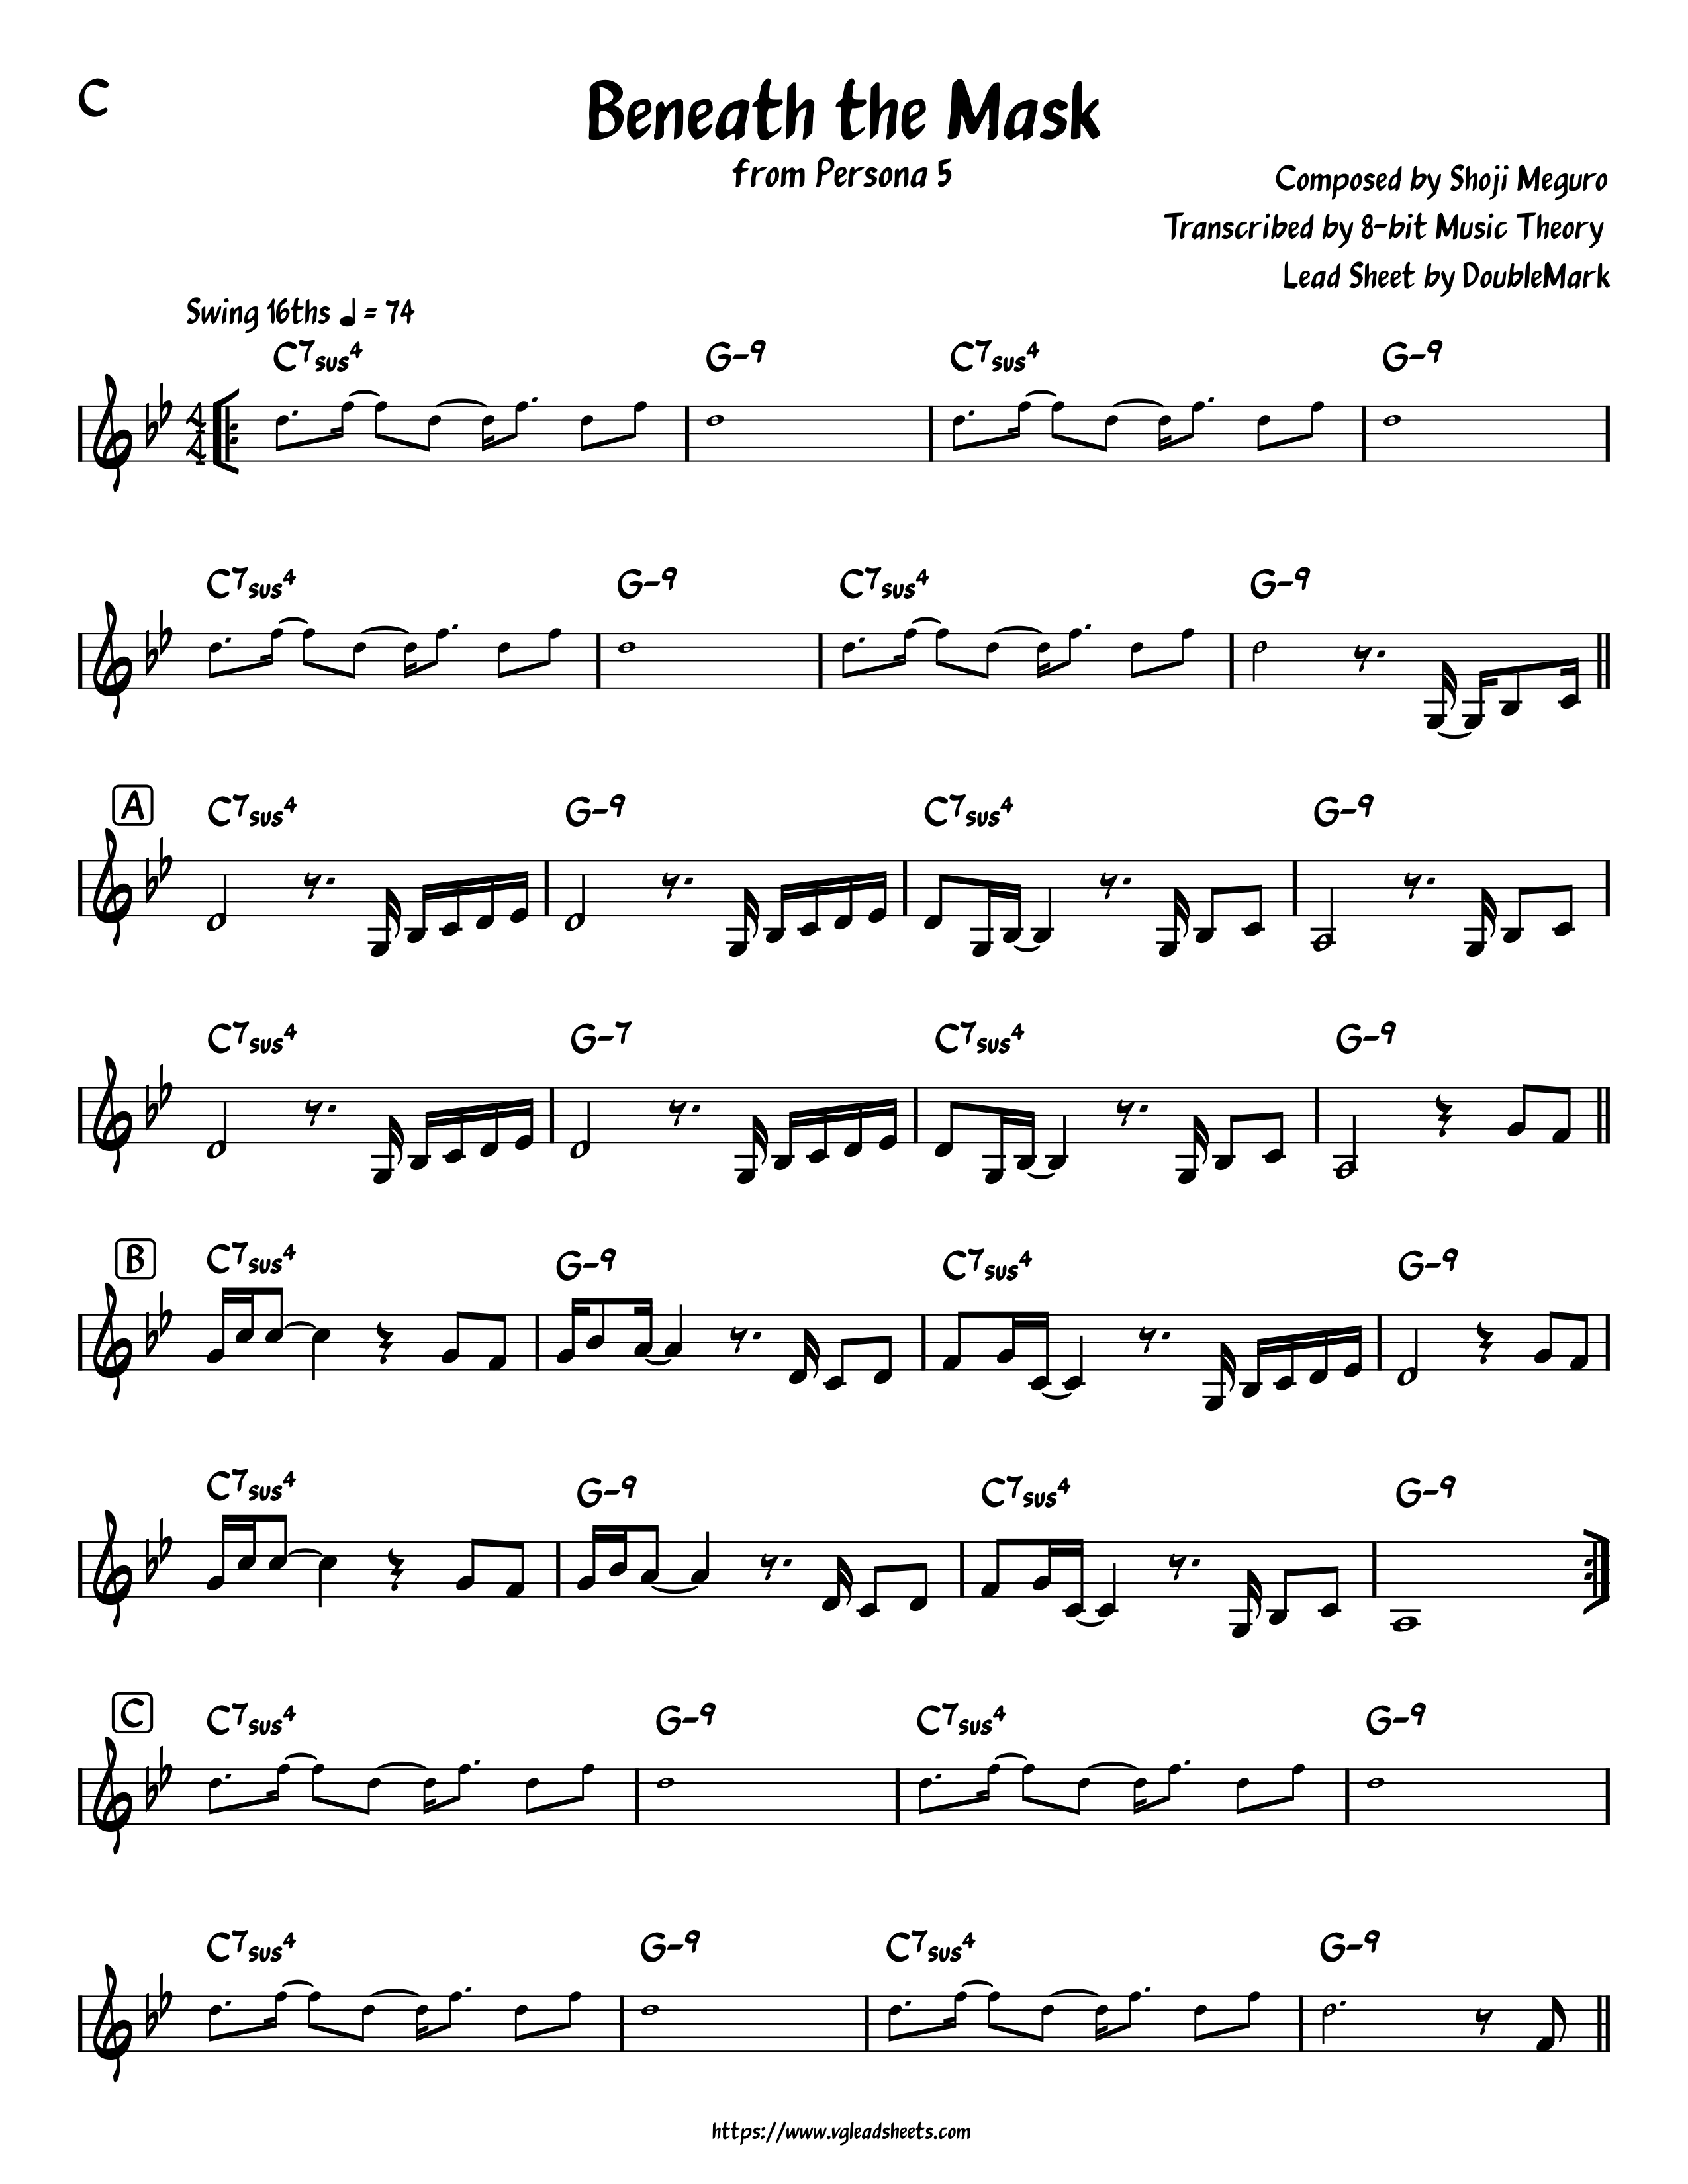 Vampire Waltz Sheet music for Piano (Solo) Easy